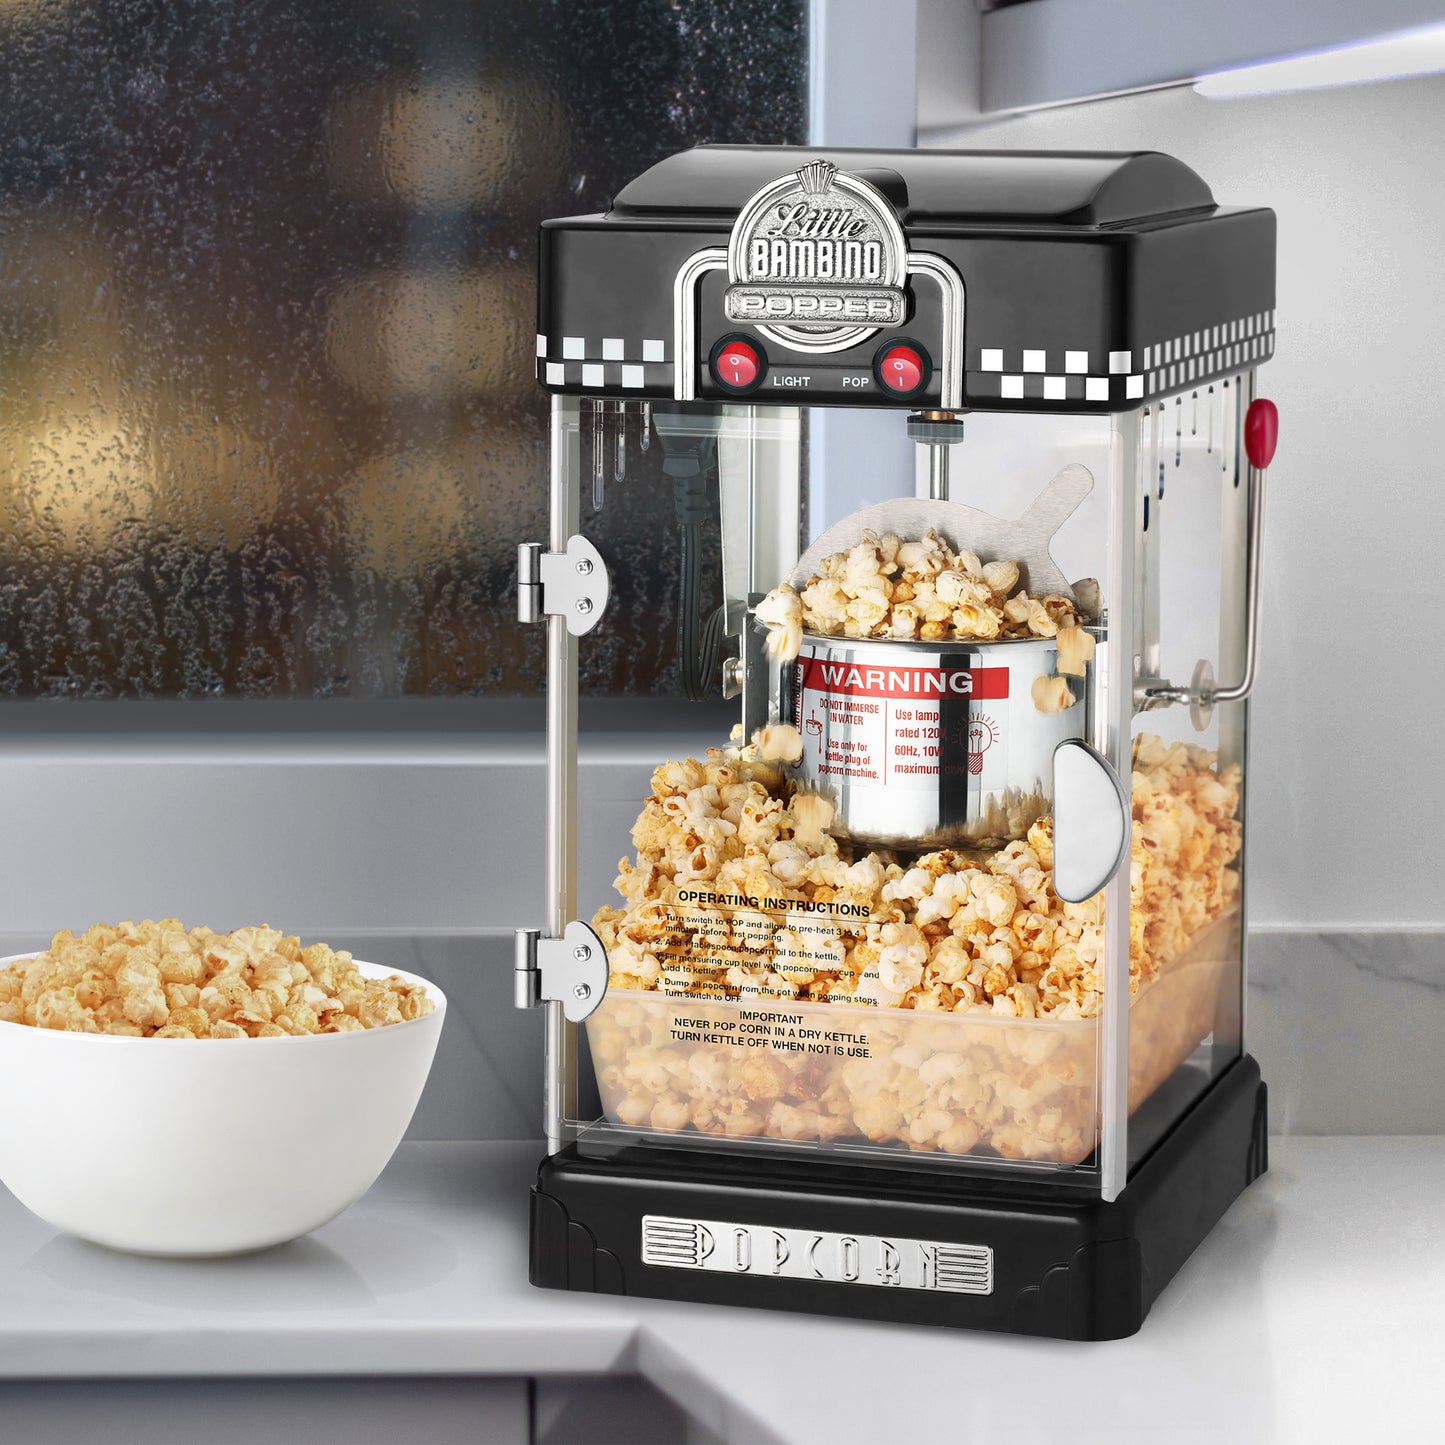 Little Bambino Countertop Popcorn Machine with 2.5 Ounce Kettle - Black